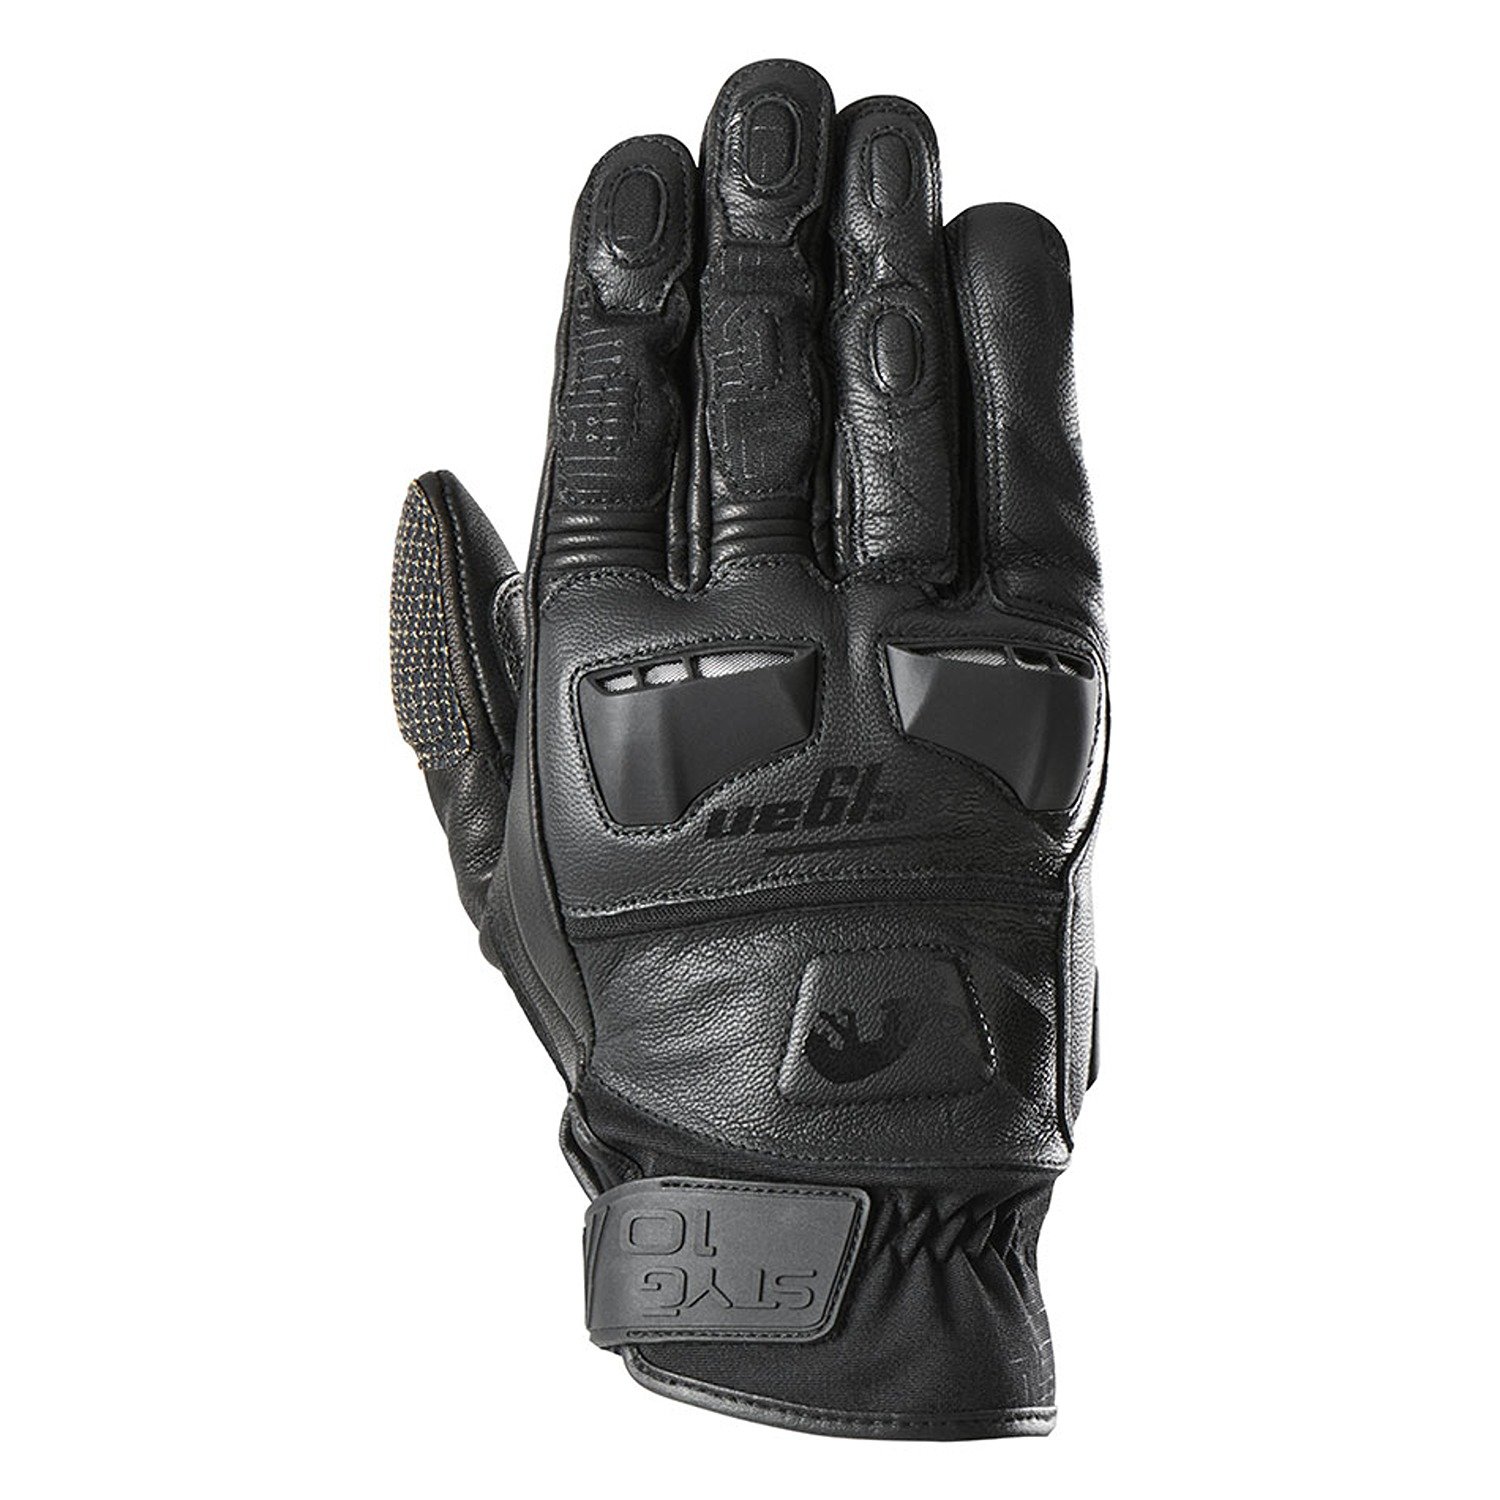 Image of Furygan Styg10 Gloves Black Size 3XL ID 3435980379193